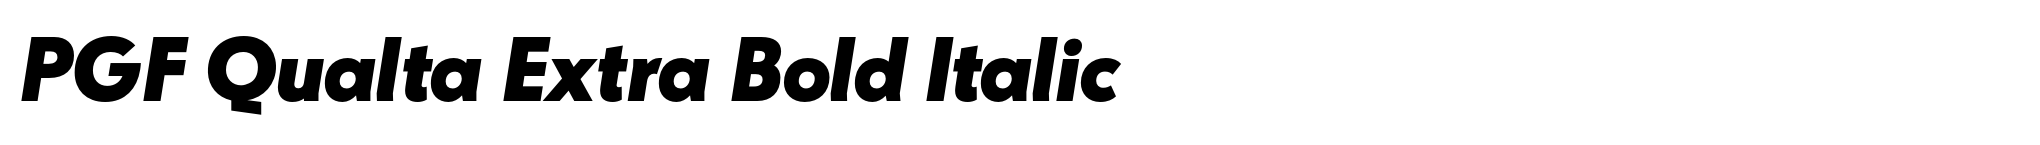 PGF Qualta Extra Bold Italic image